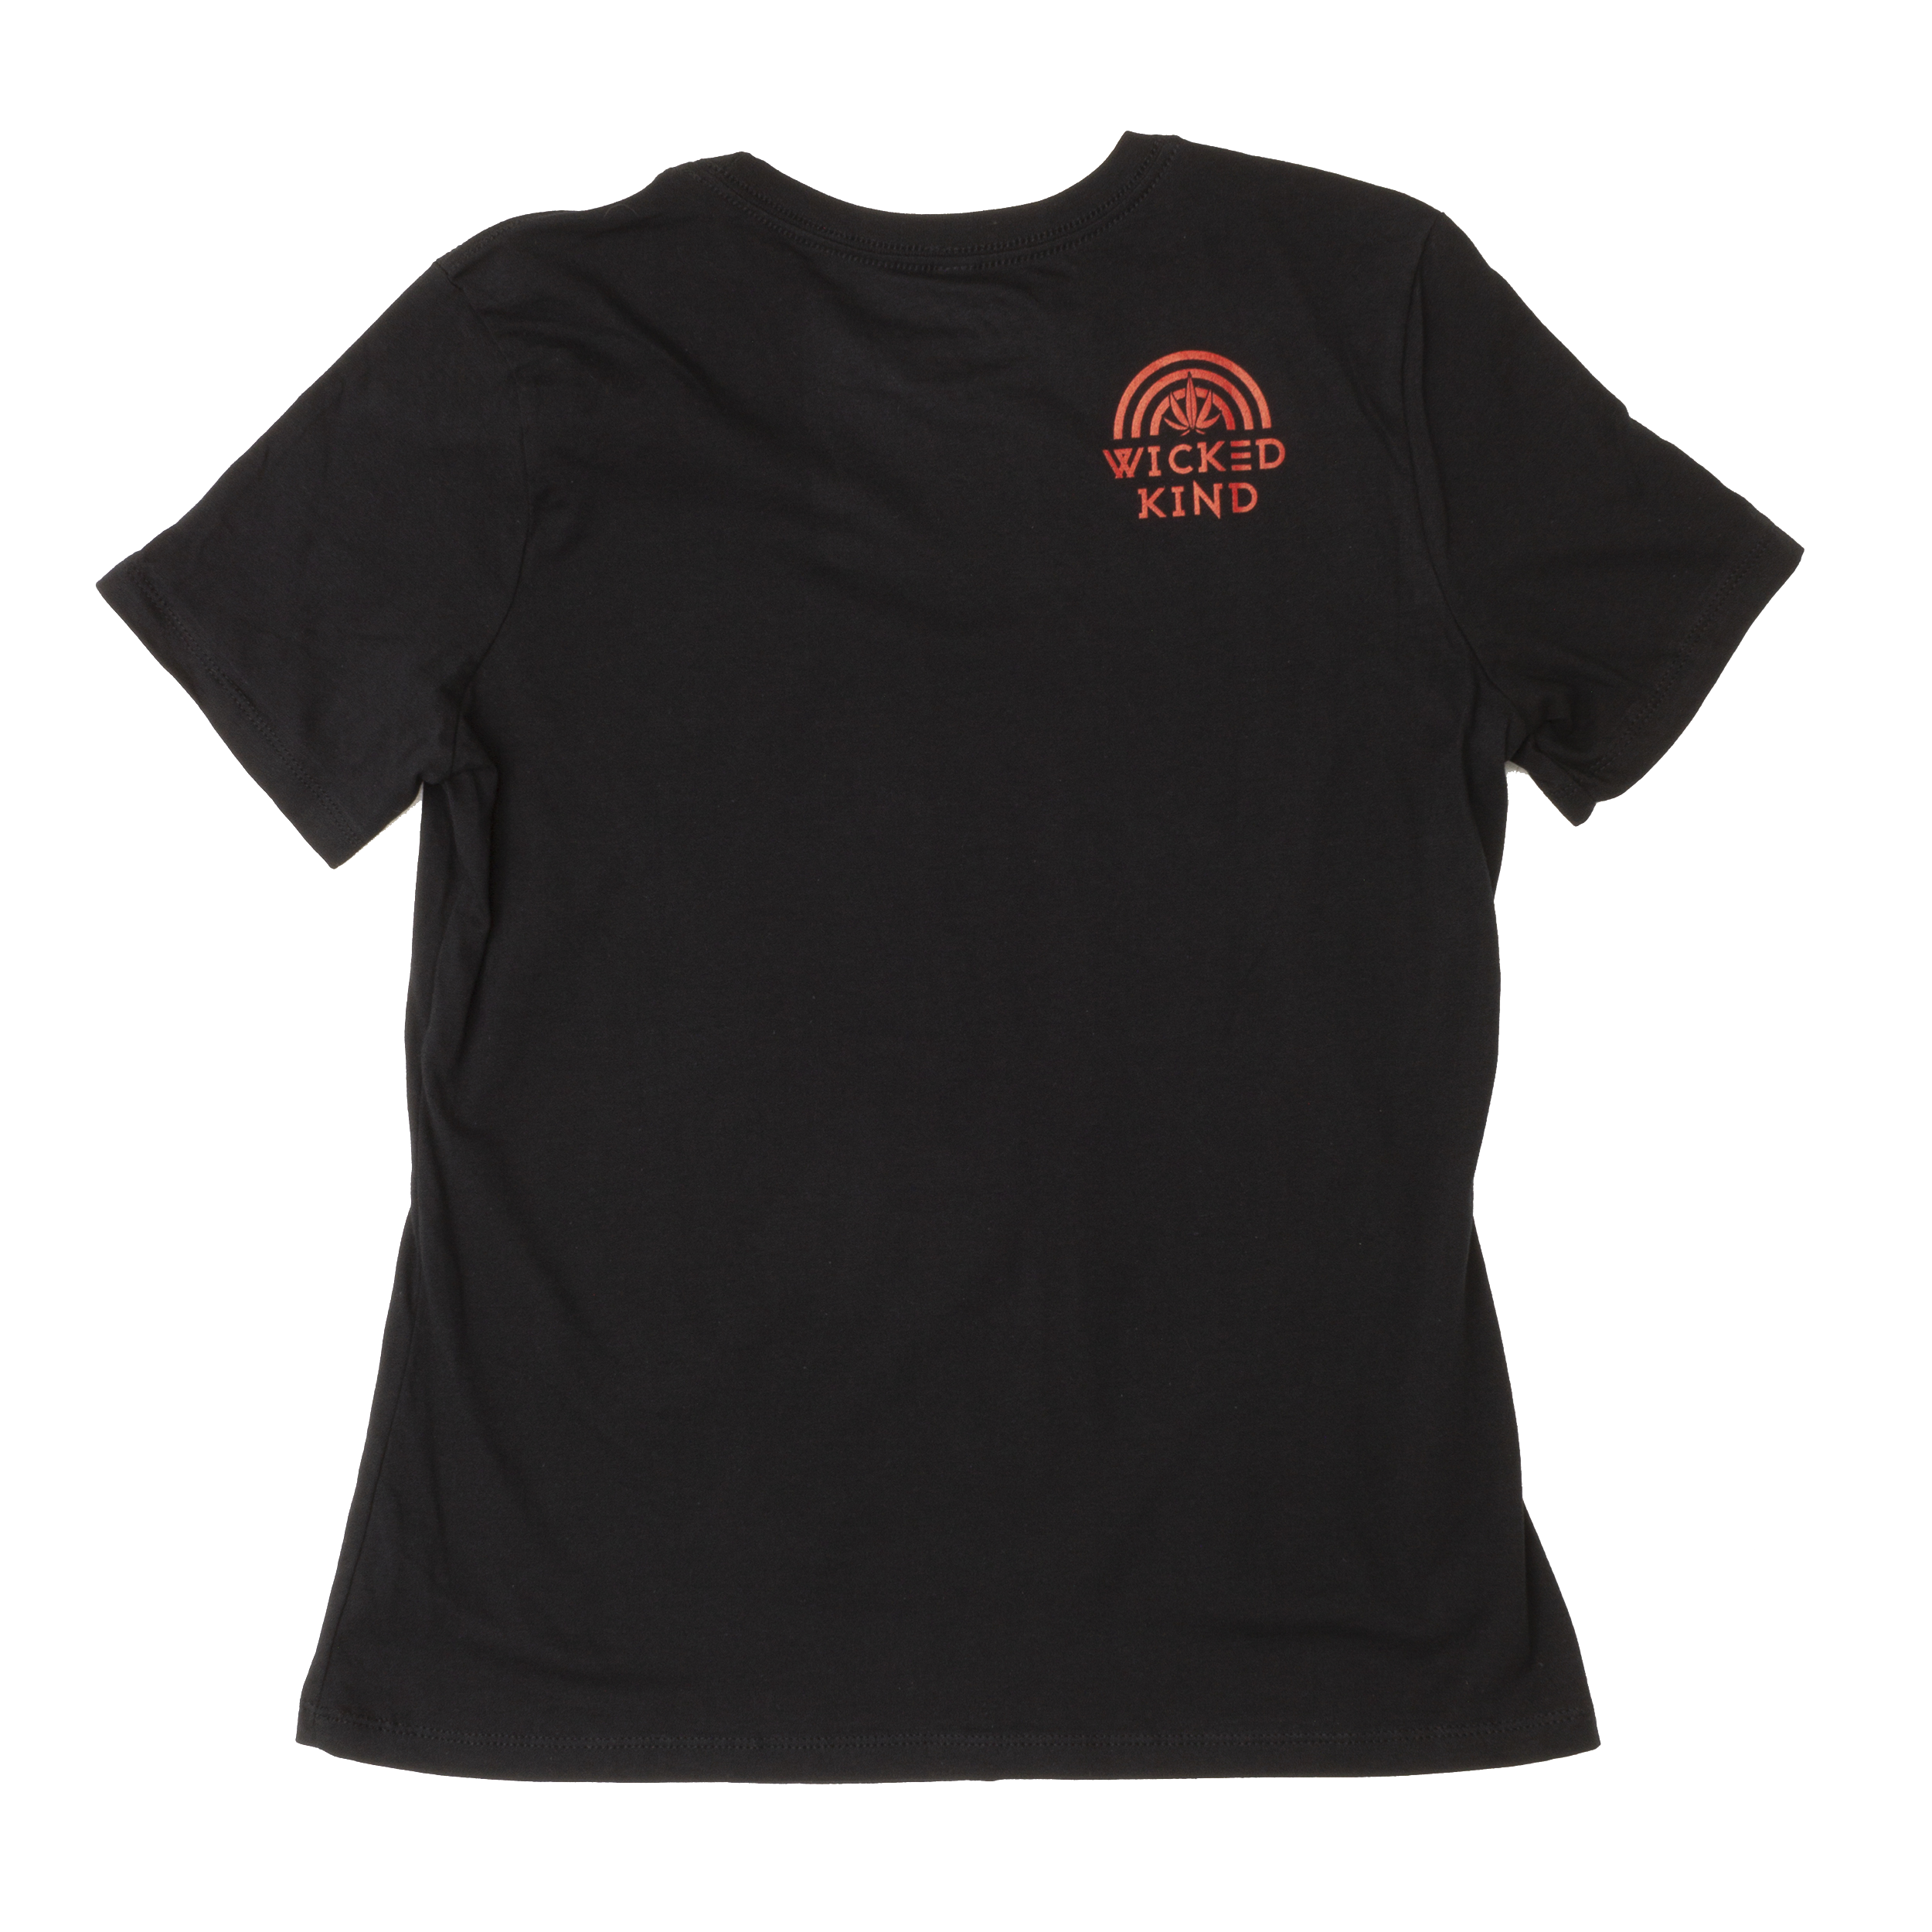 Get Lost Women's Black T-shirt